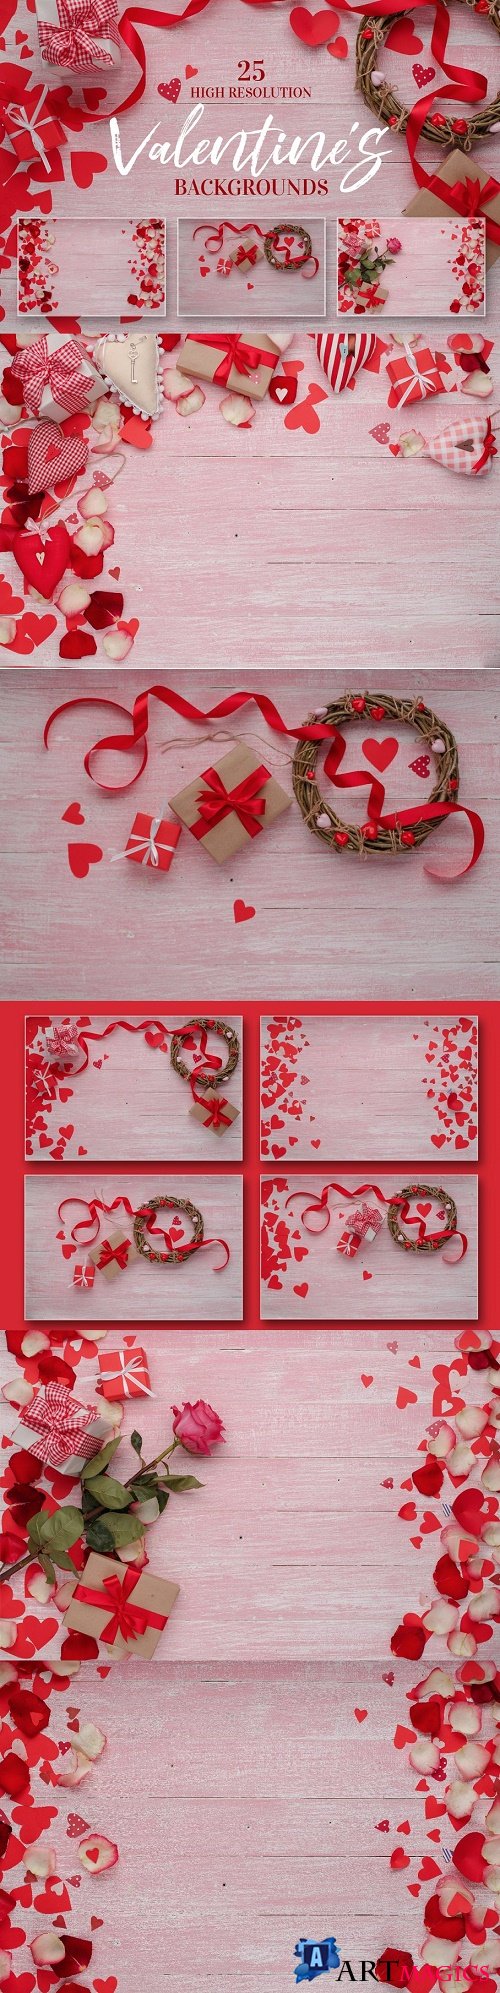 Valentines Day love celebration JPG - 4283132